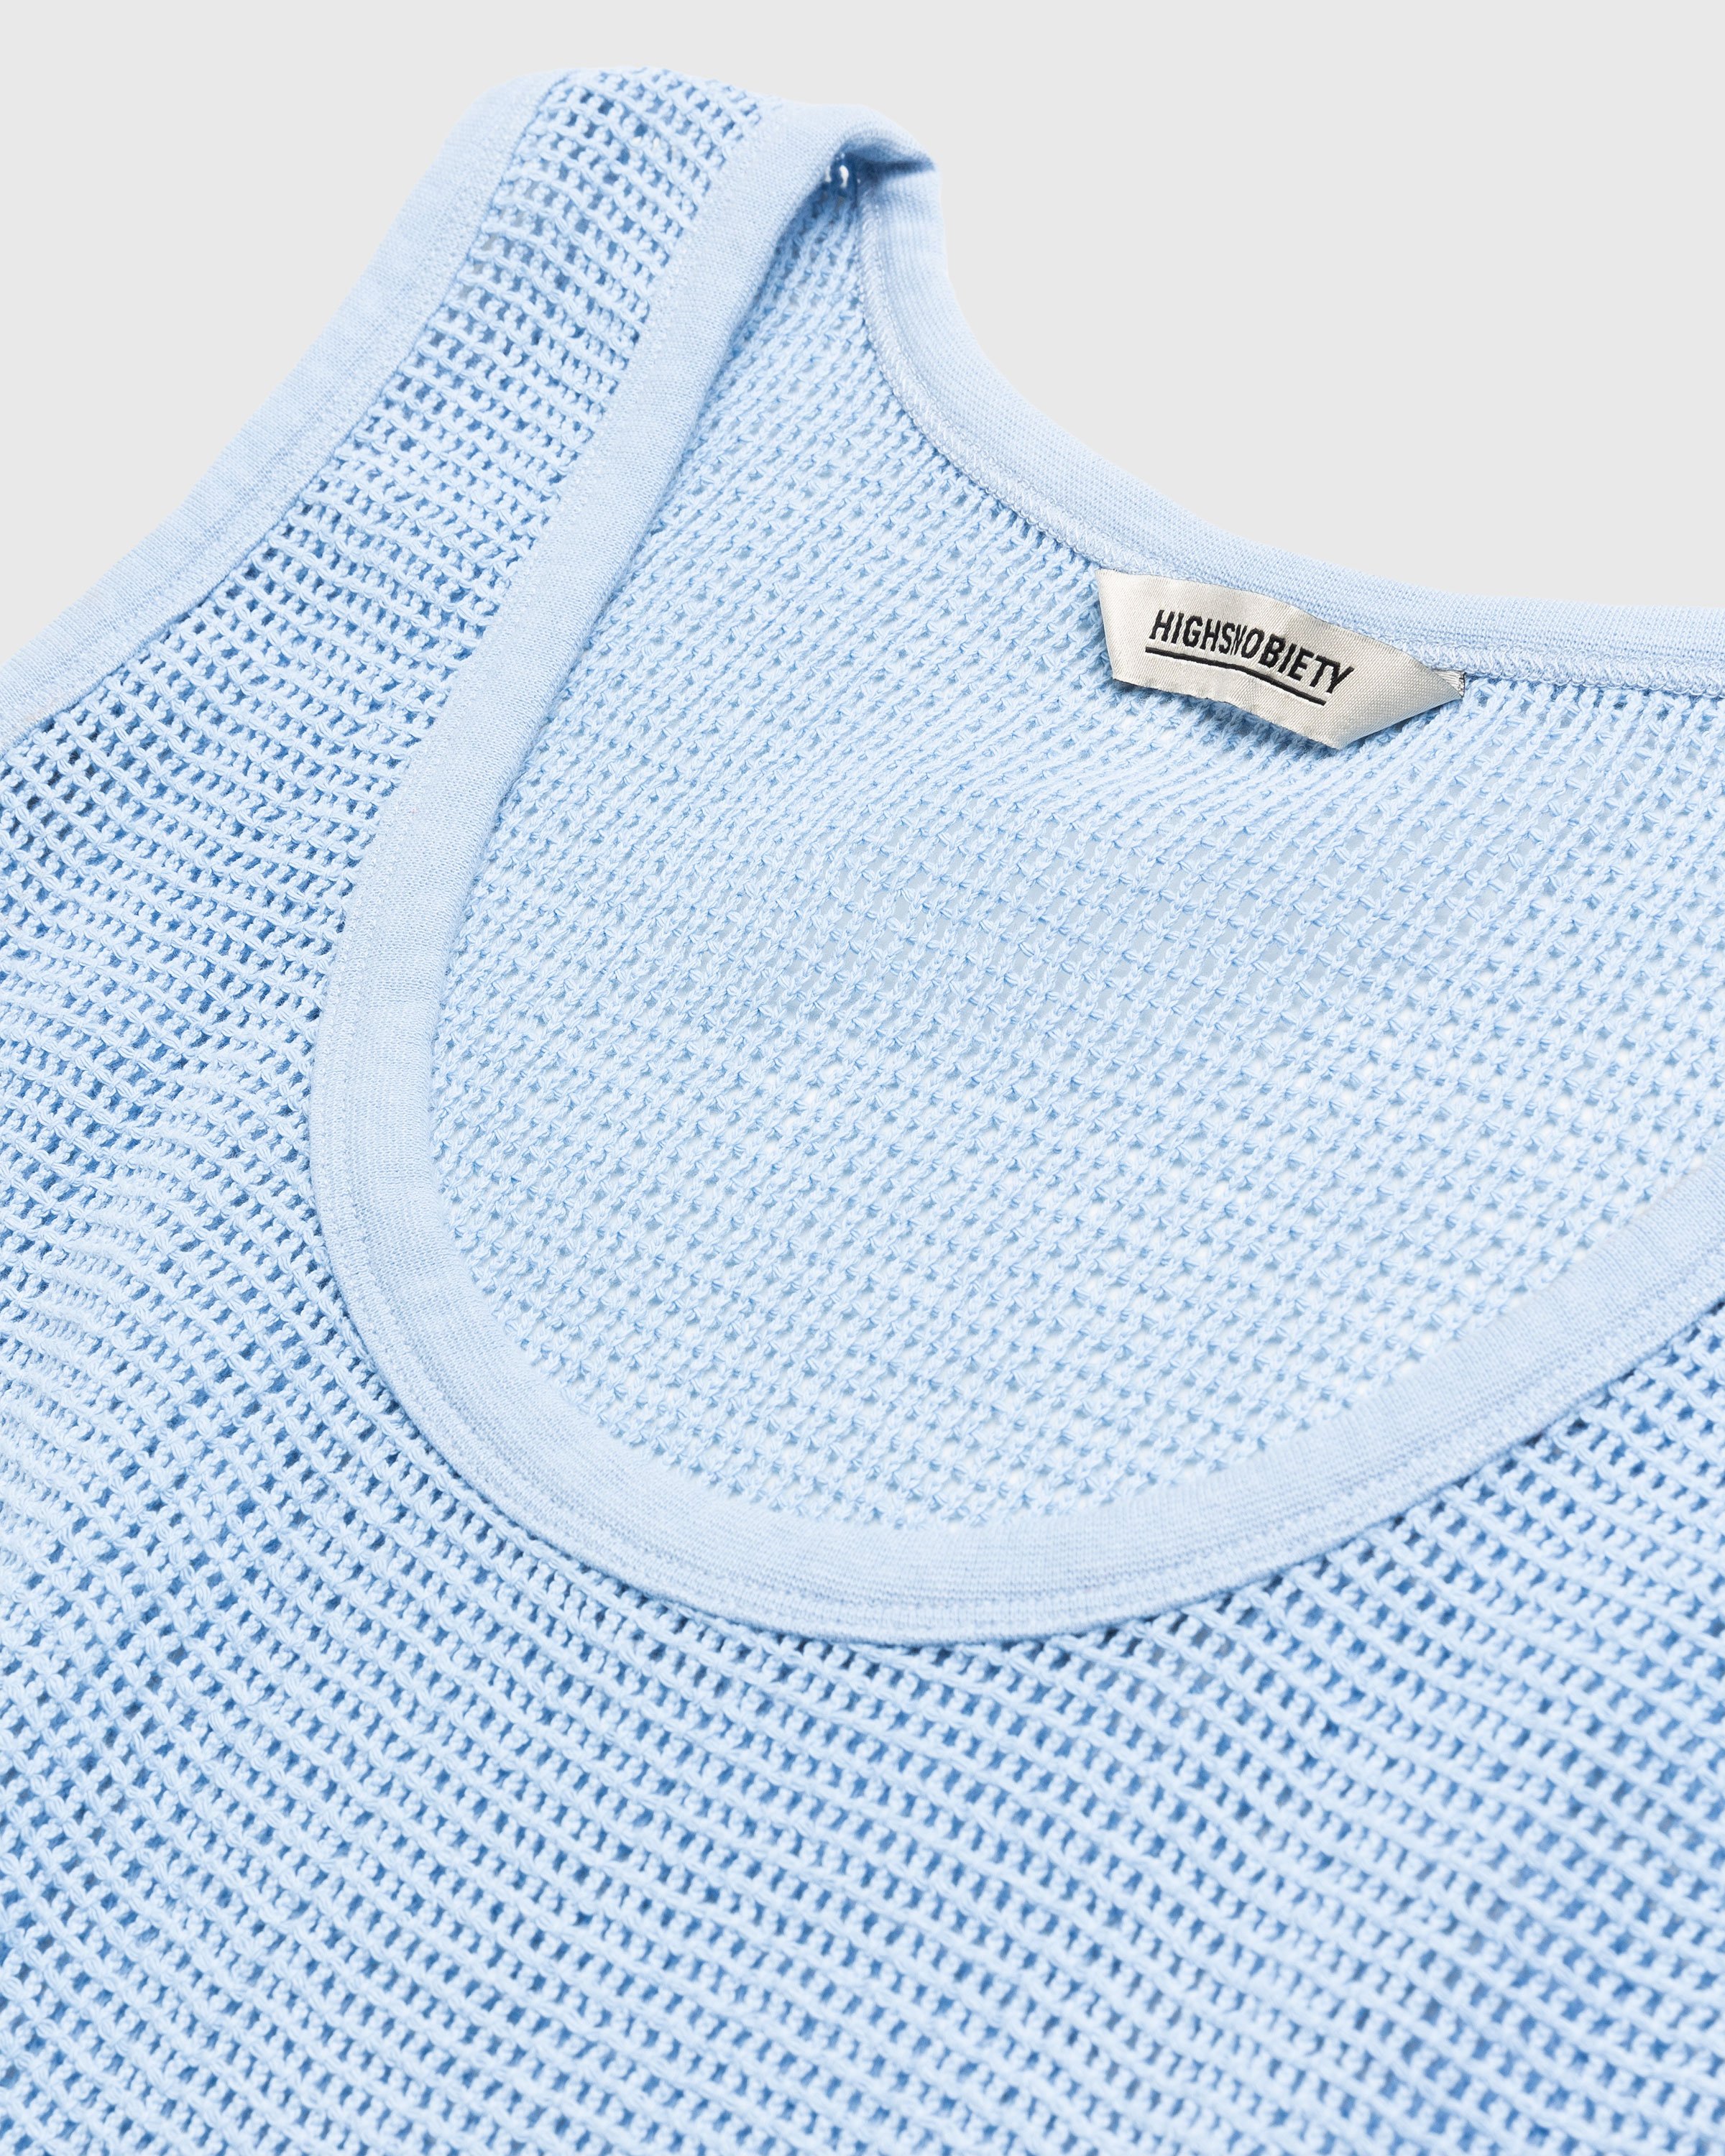 Highsnobiety - Cotton Mesh Knit Tank Top Blue - Clothing - Blue - Image 6